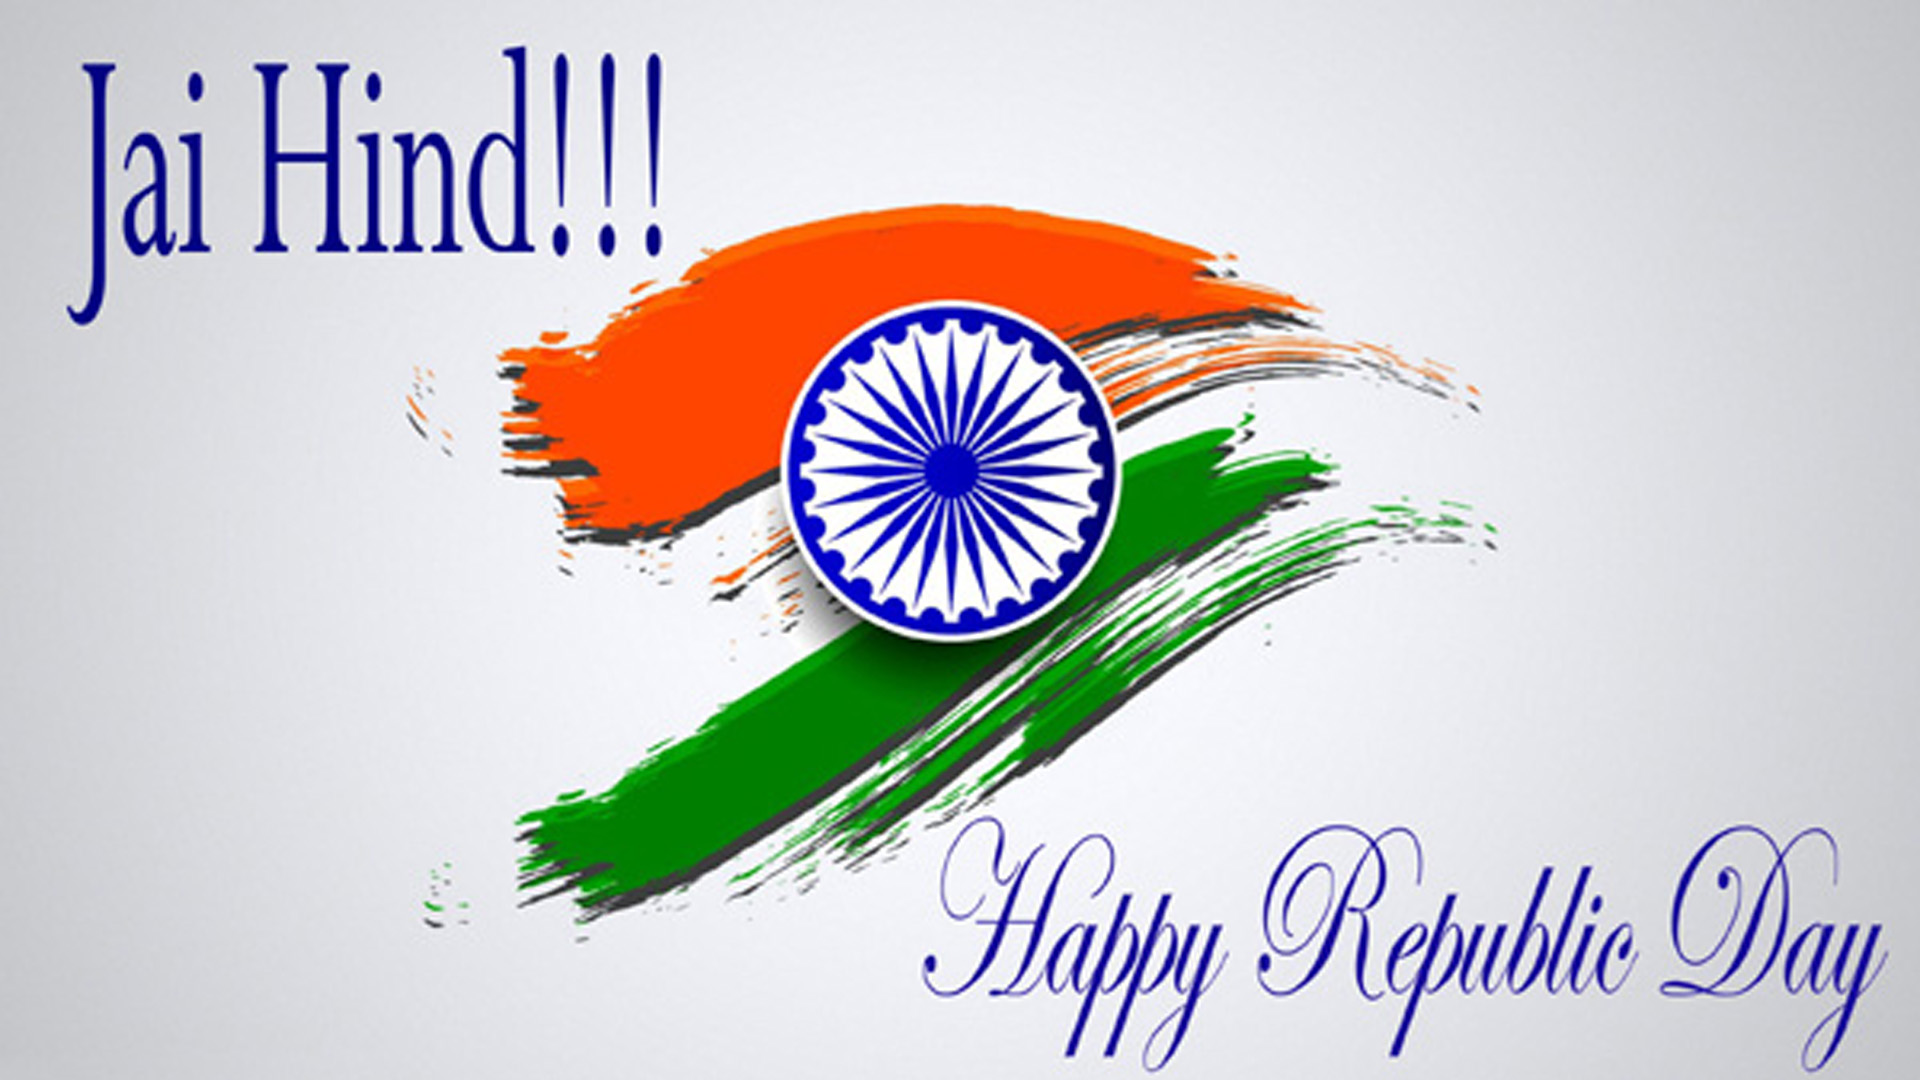 Jai Hind Happy Republic Day 2K Republic Day